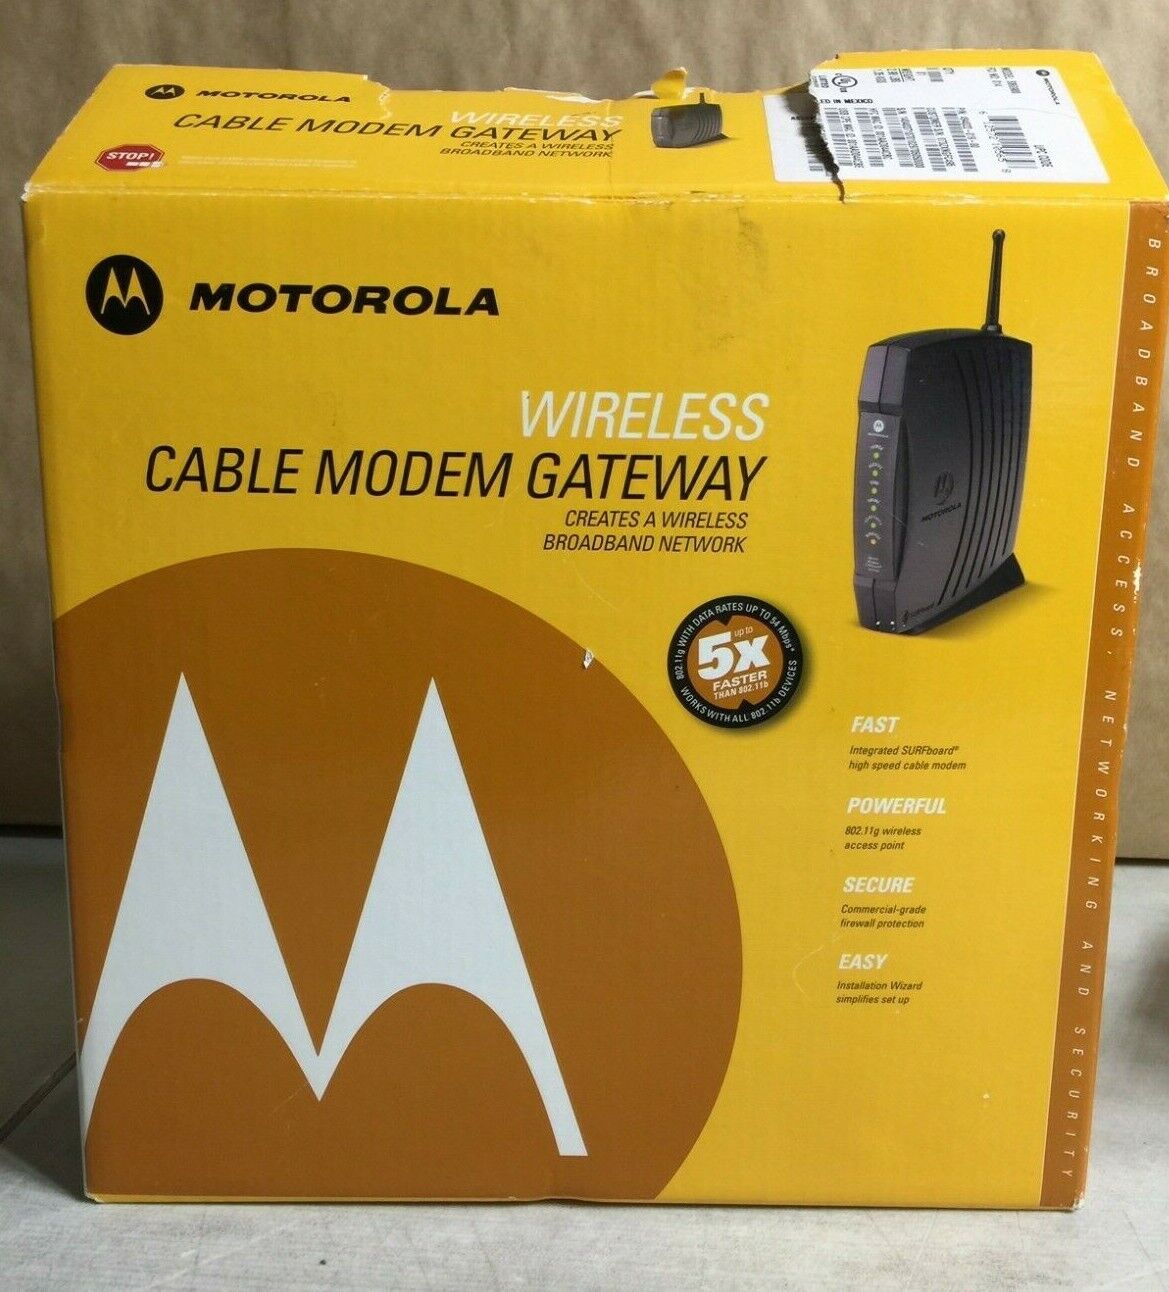 Motorola SBG900 Cable Modem Gateway Wireless Broadband Networking Device PC 